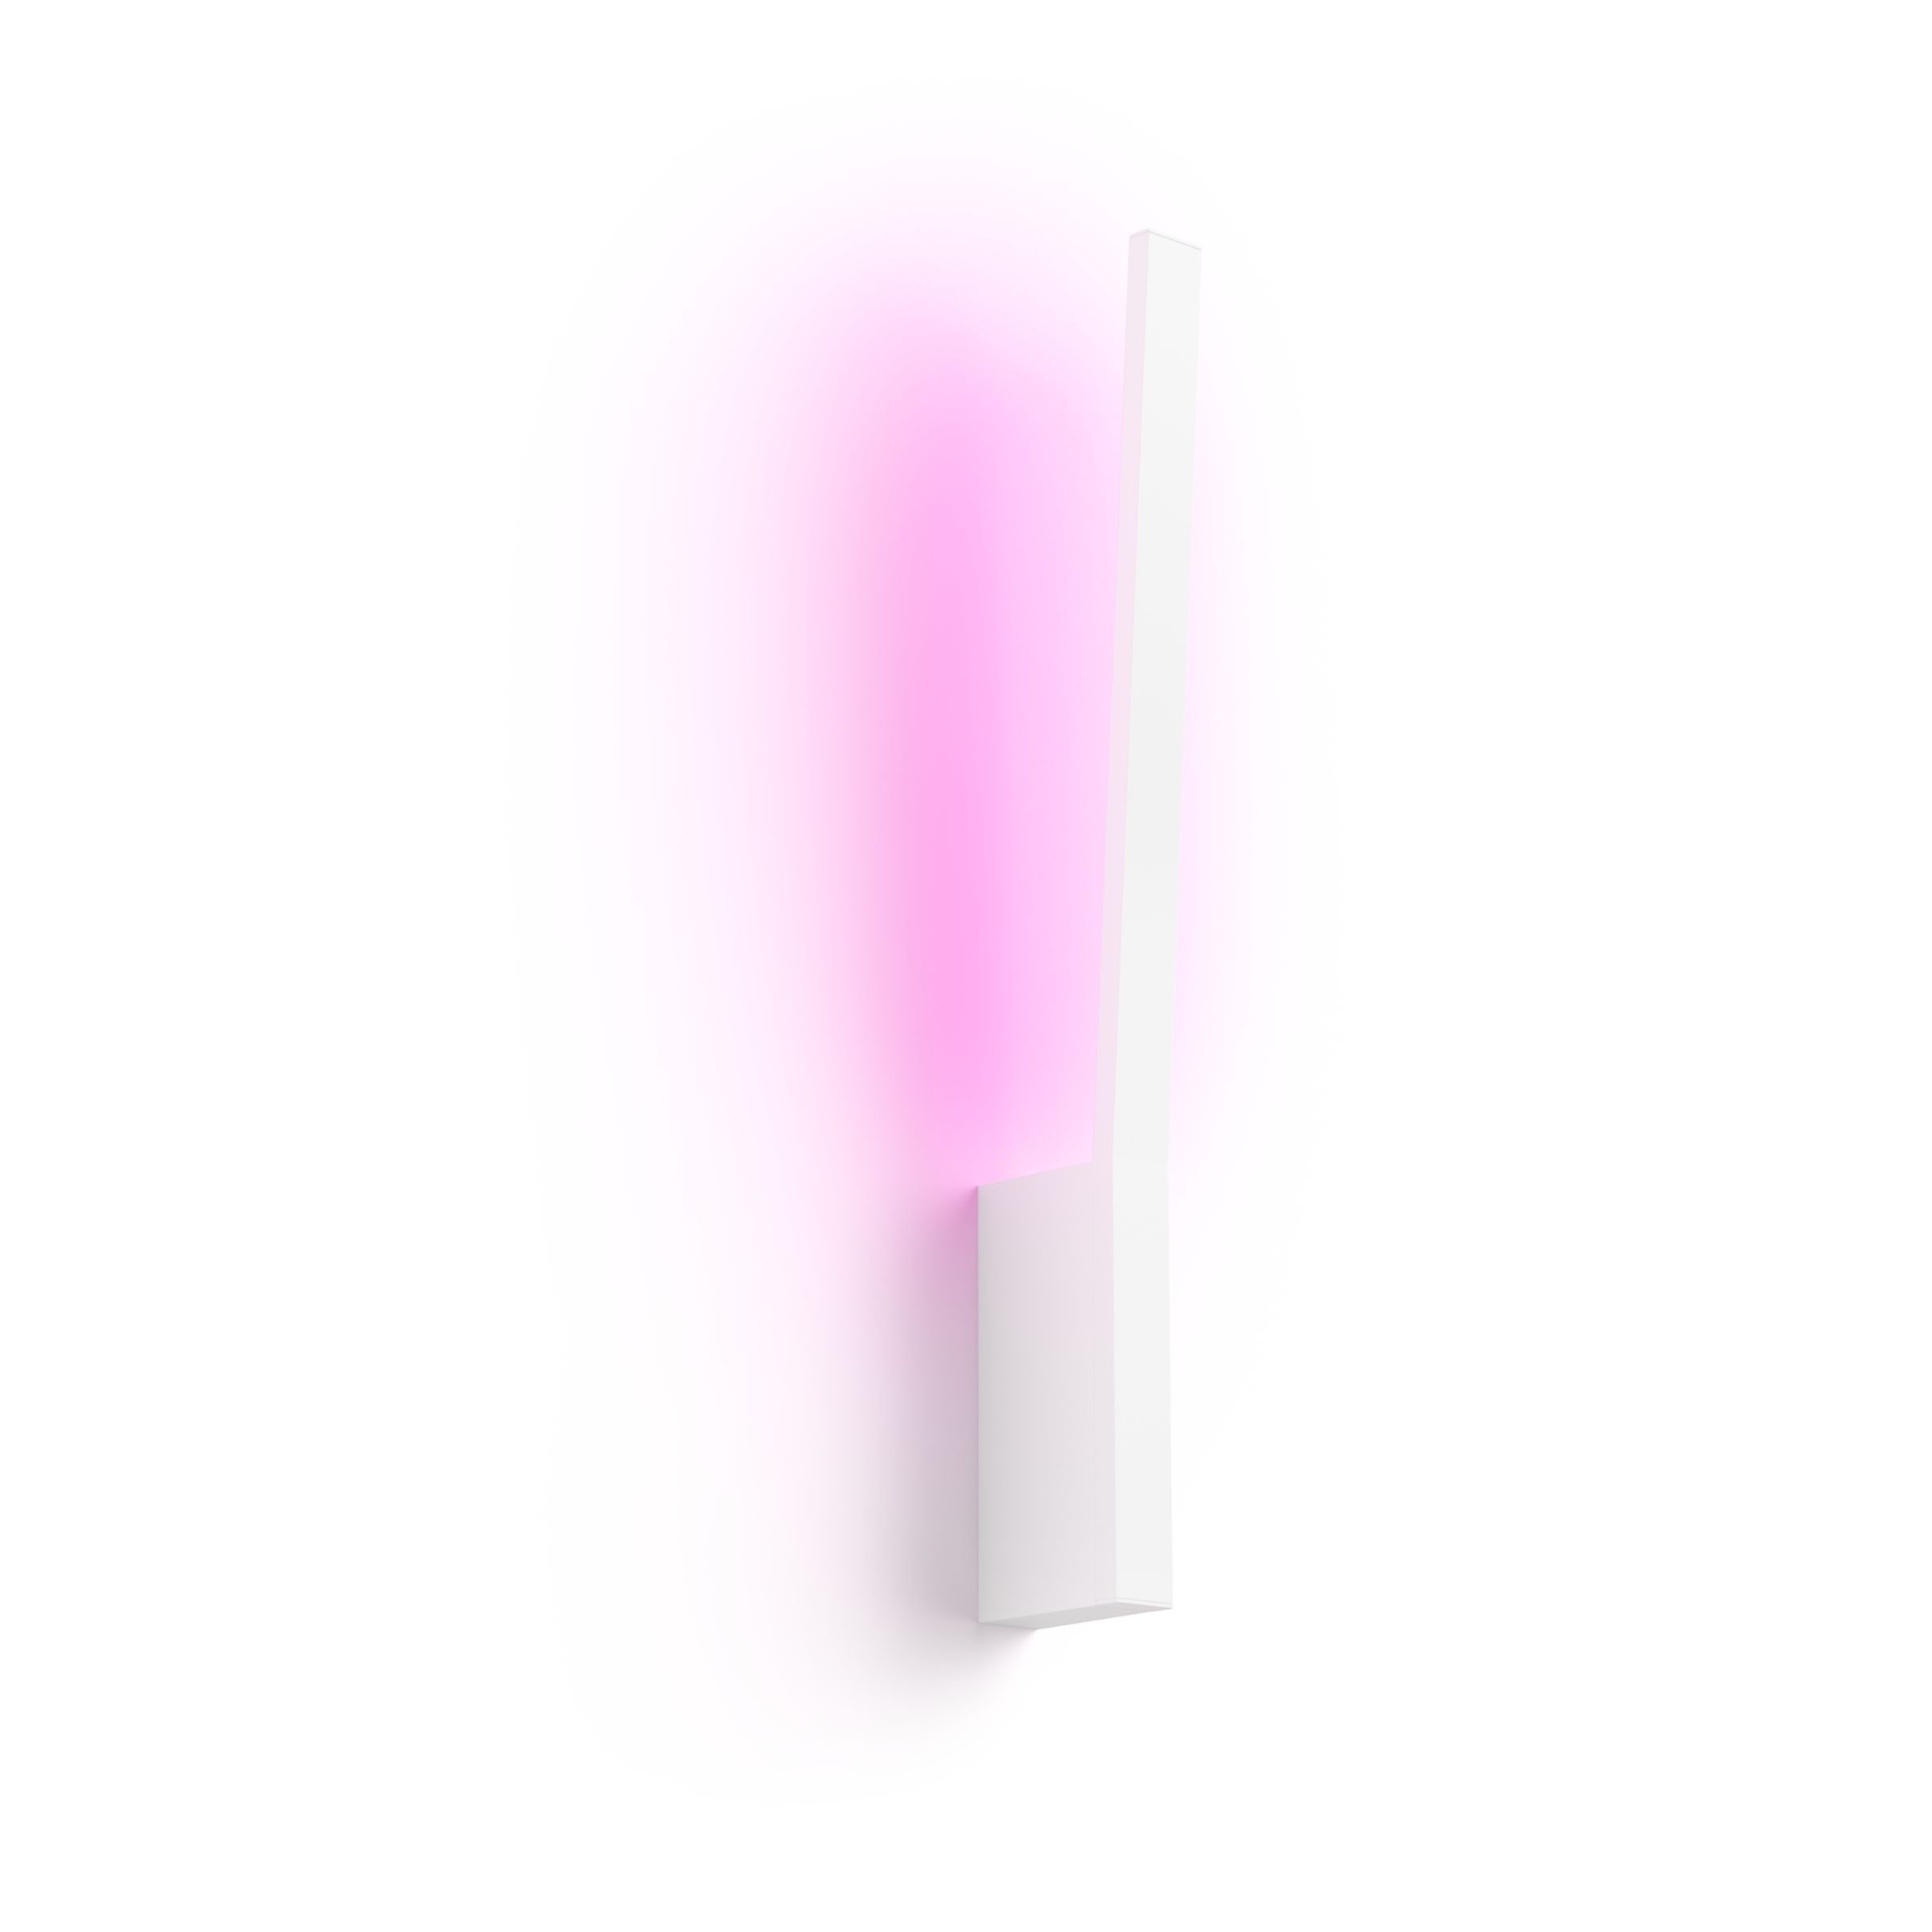 Sta op Rand vastleggen Hue White and Color Ambiance Liane wandlamp | Philips Hue NL-BE